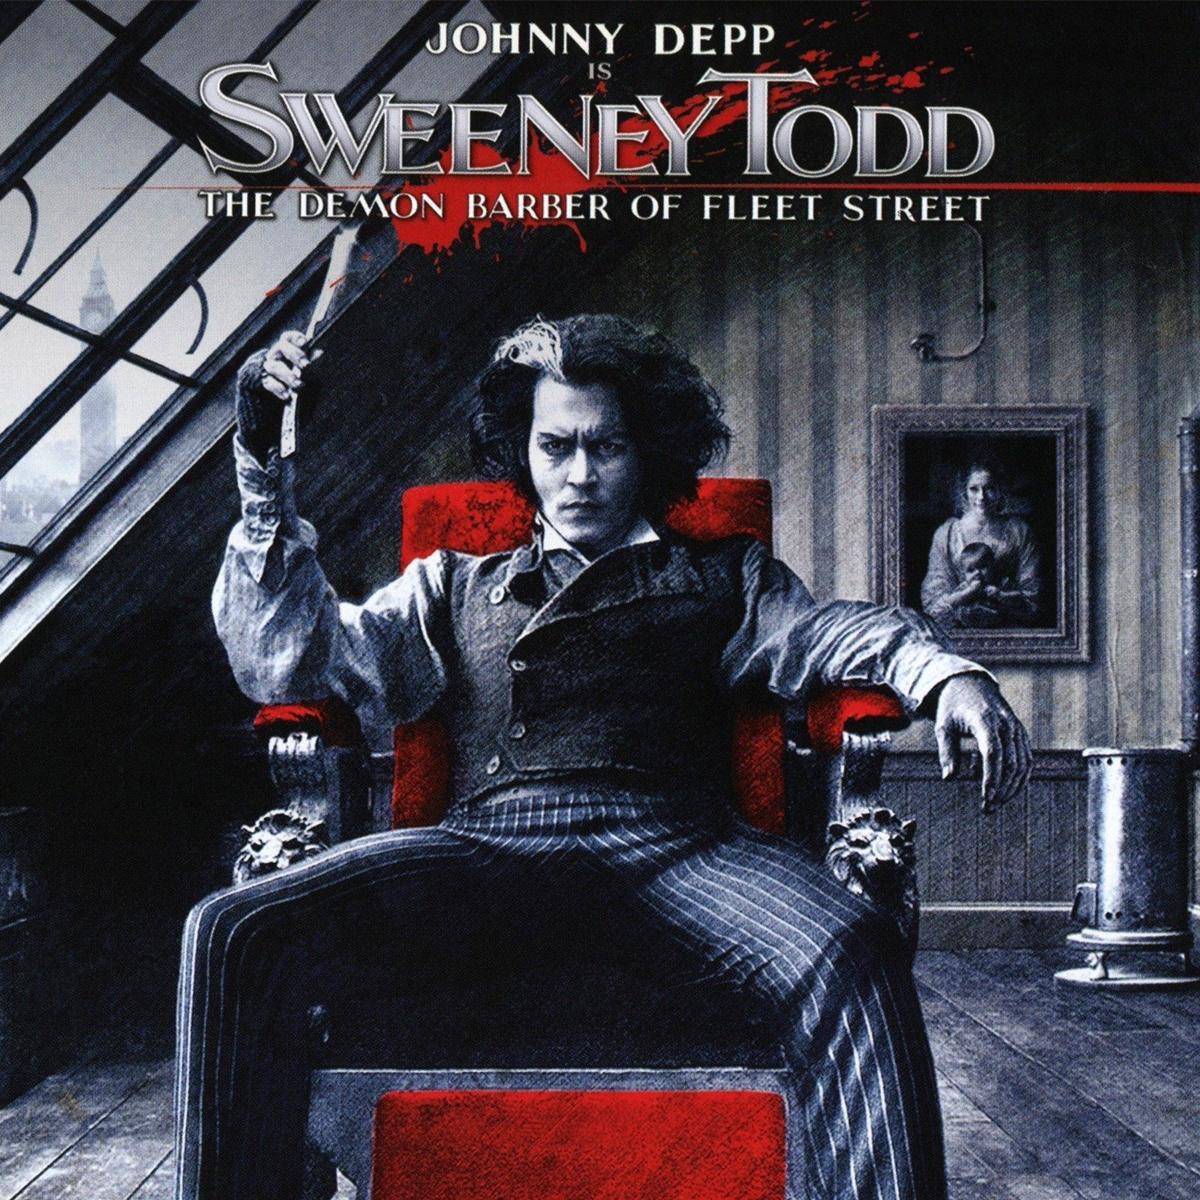 Sweeney Todd The Demon Barber of Fleet Street Movie for Free